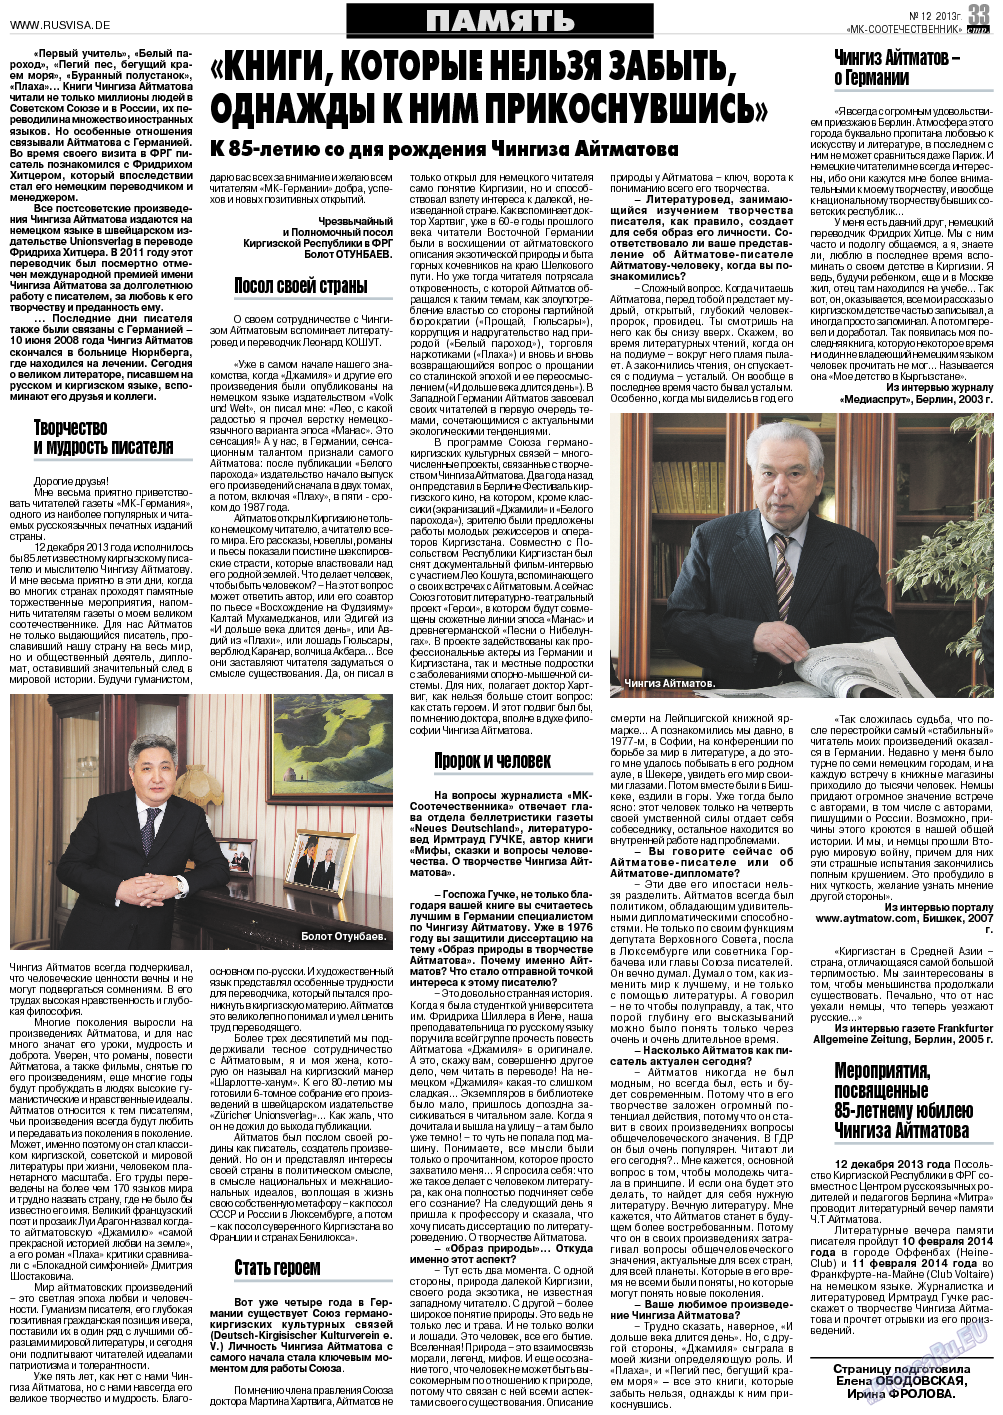 МК-Германия планета мнений, газета. 2013 №12 стр.33